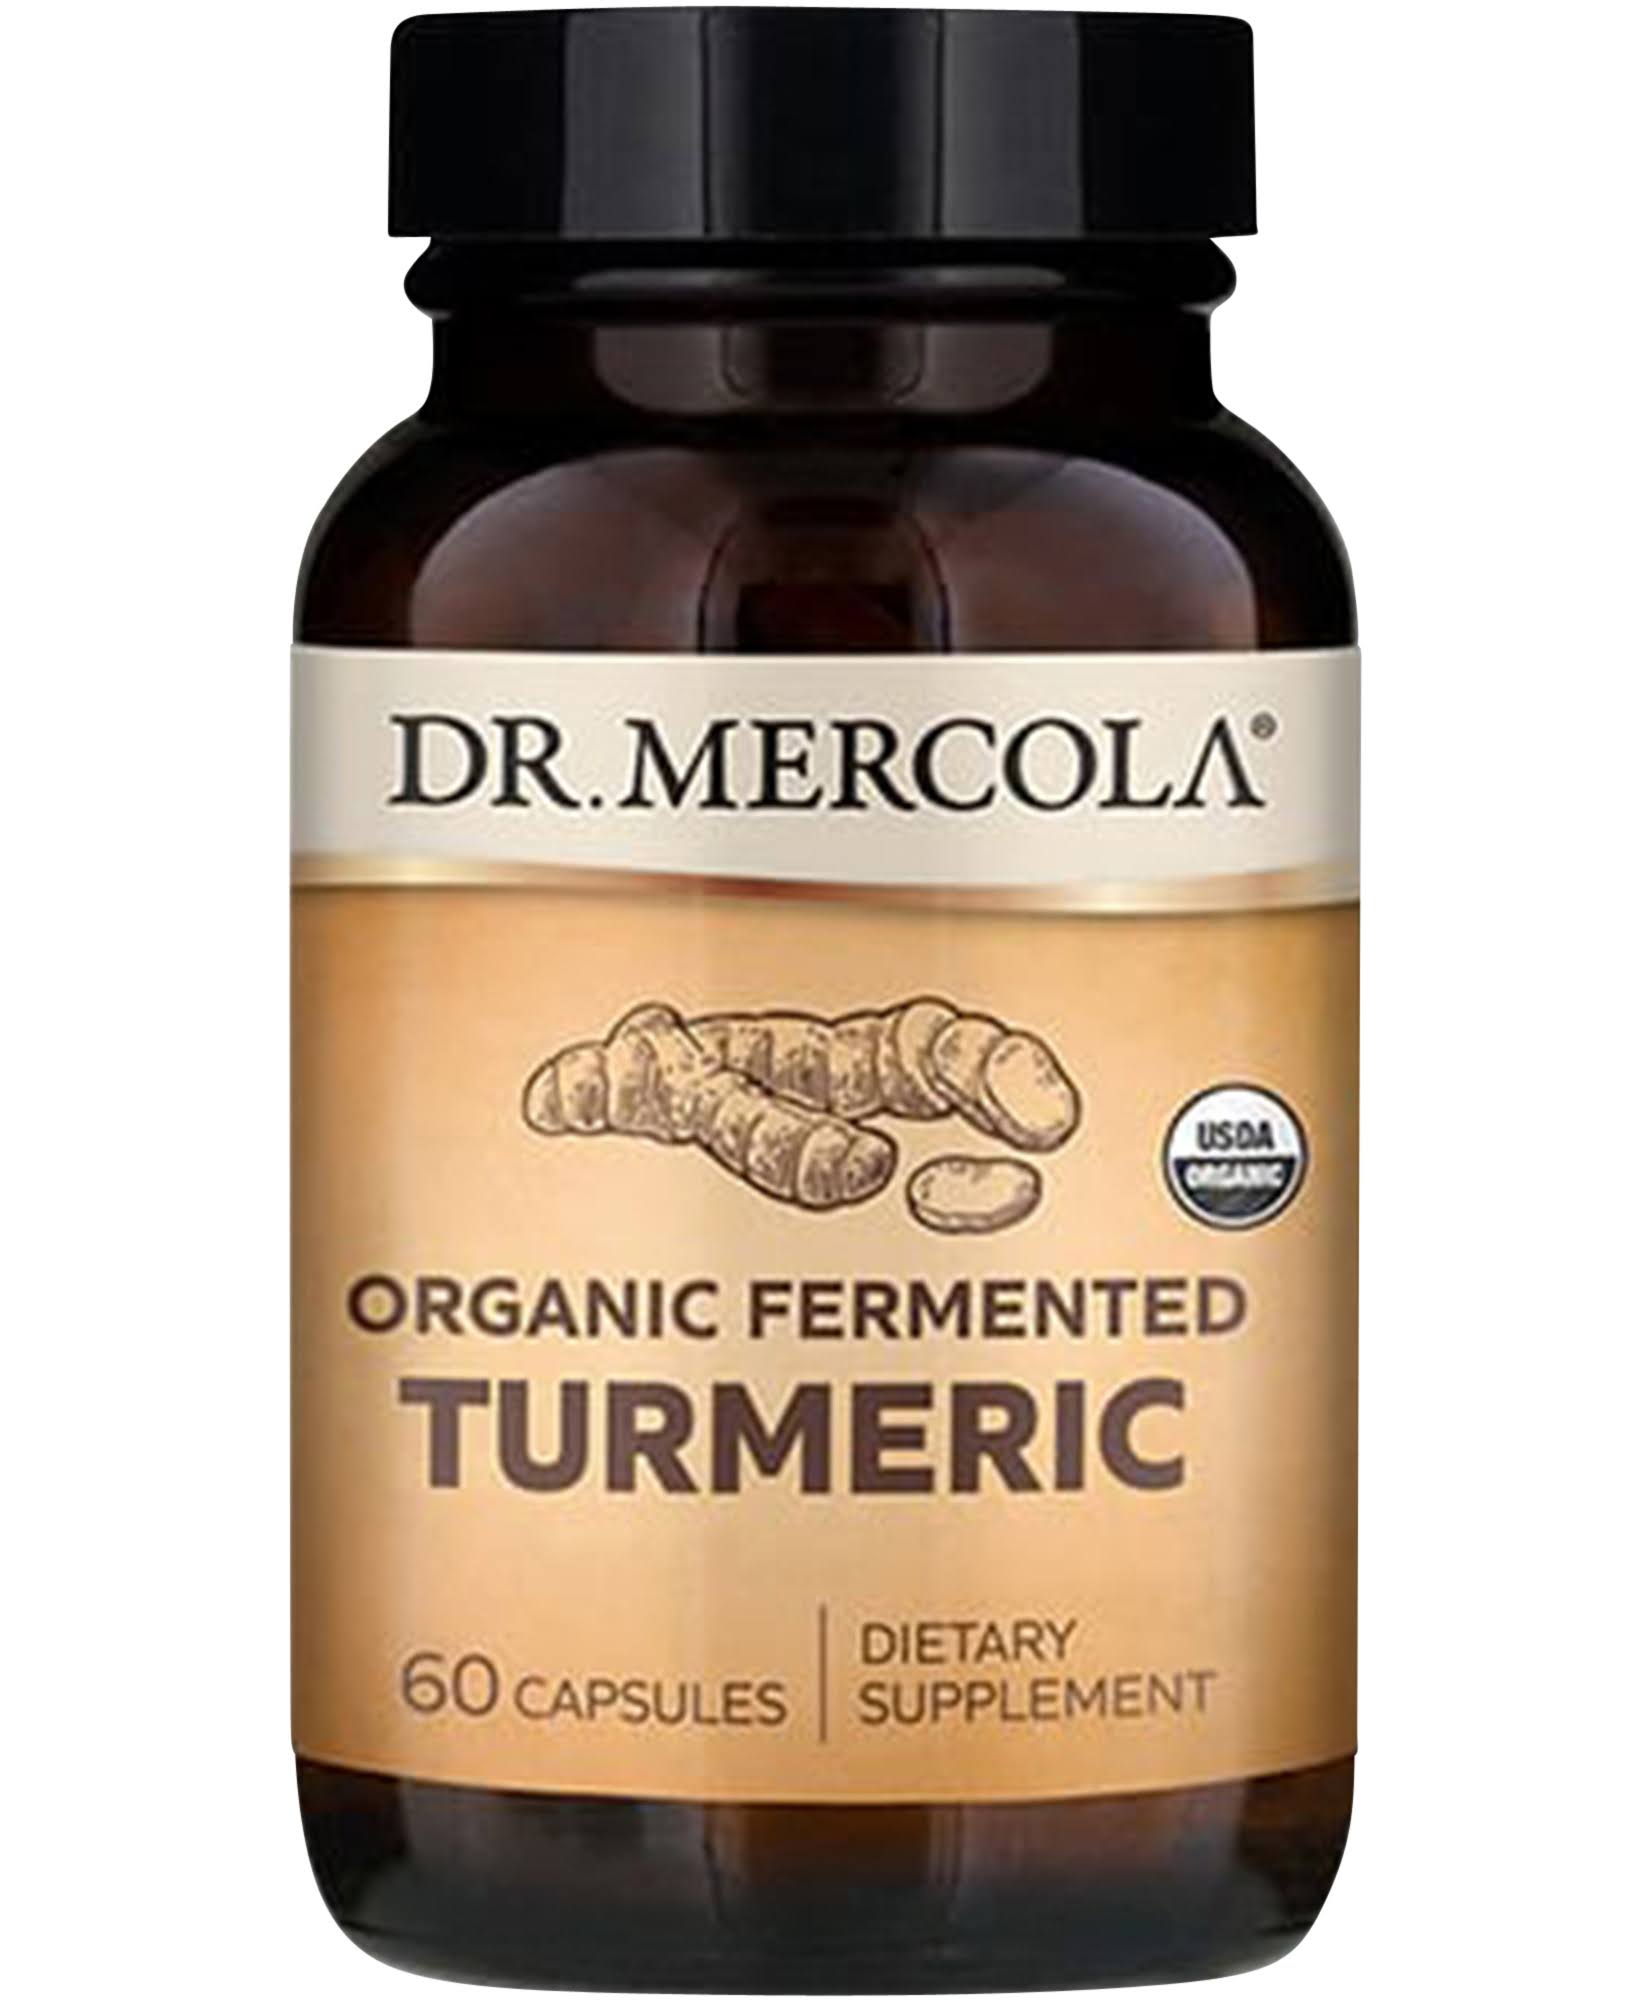 Dr. Mercola Fermented Turmeric Dietary Supplement - 60ct